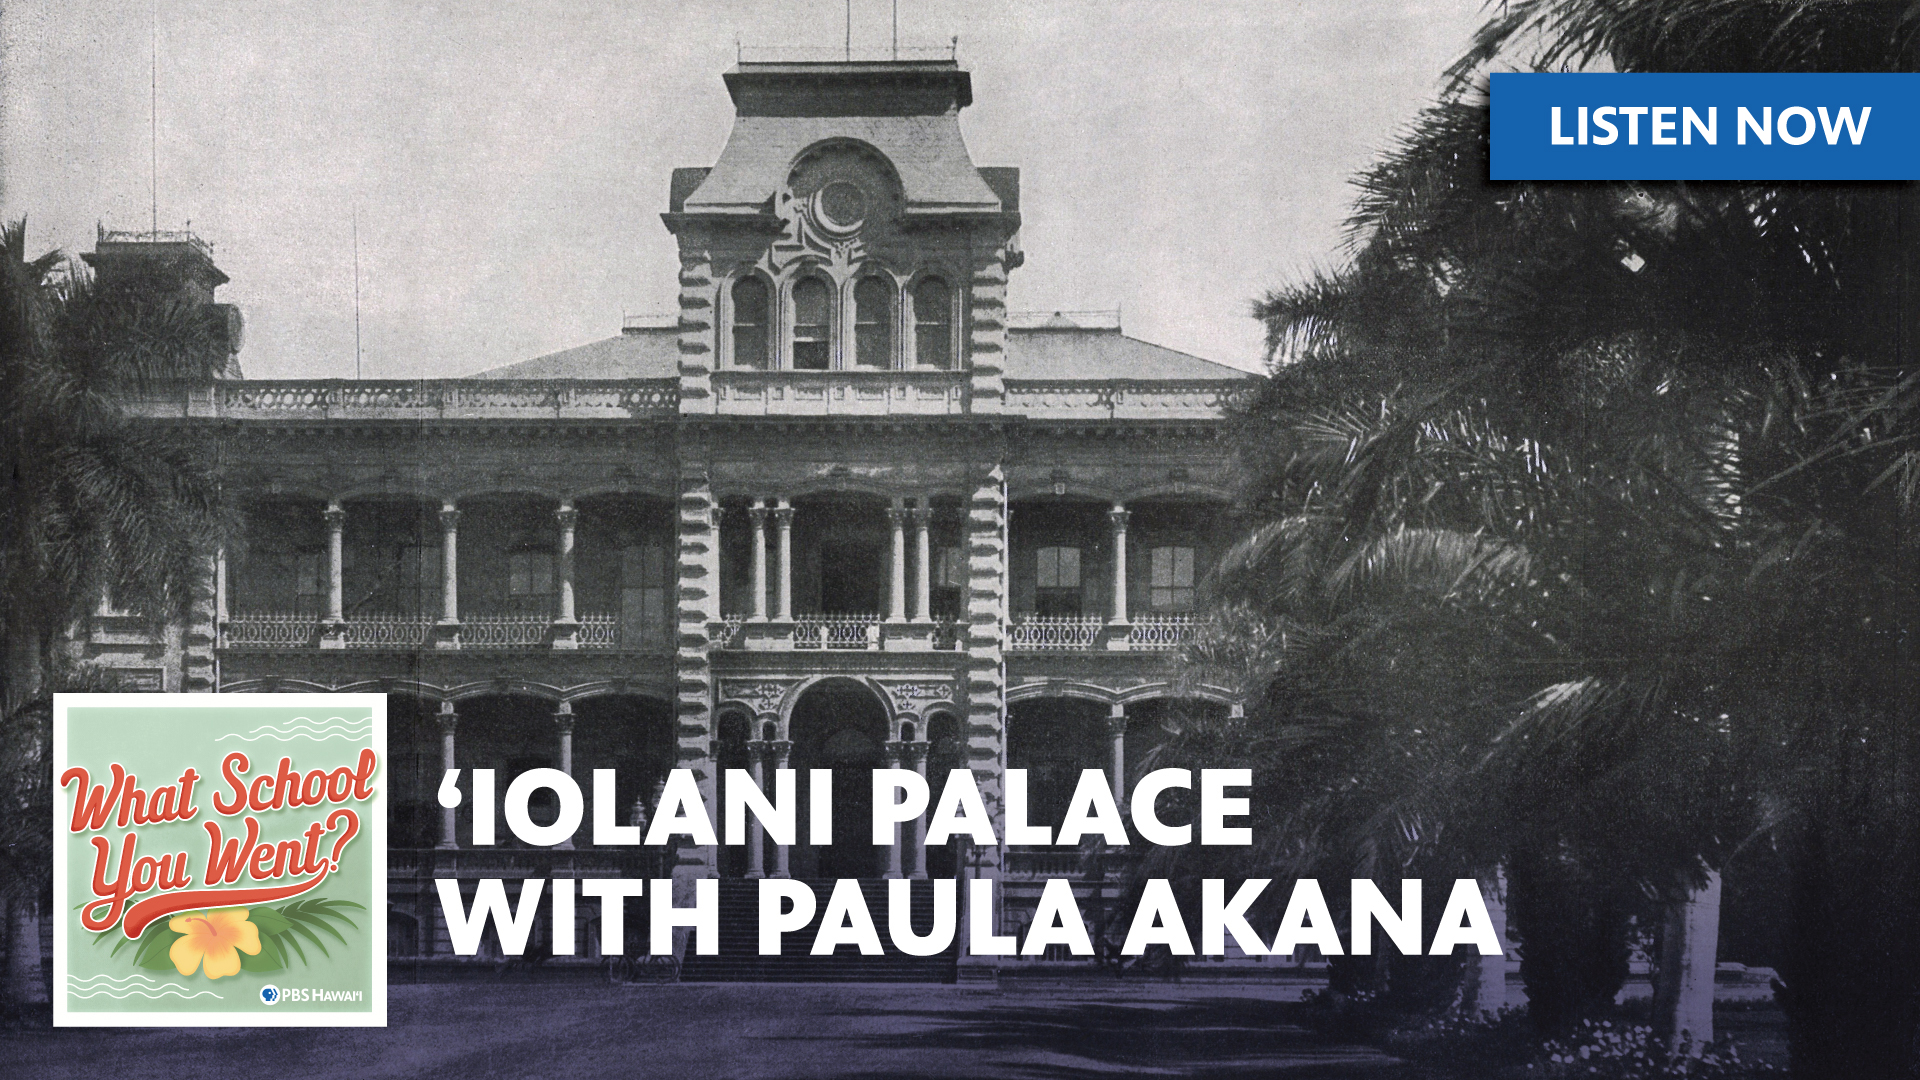 ʻIolani Palace with Paula Akana